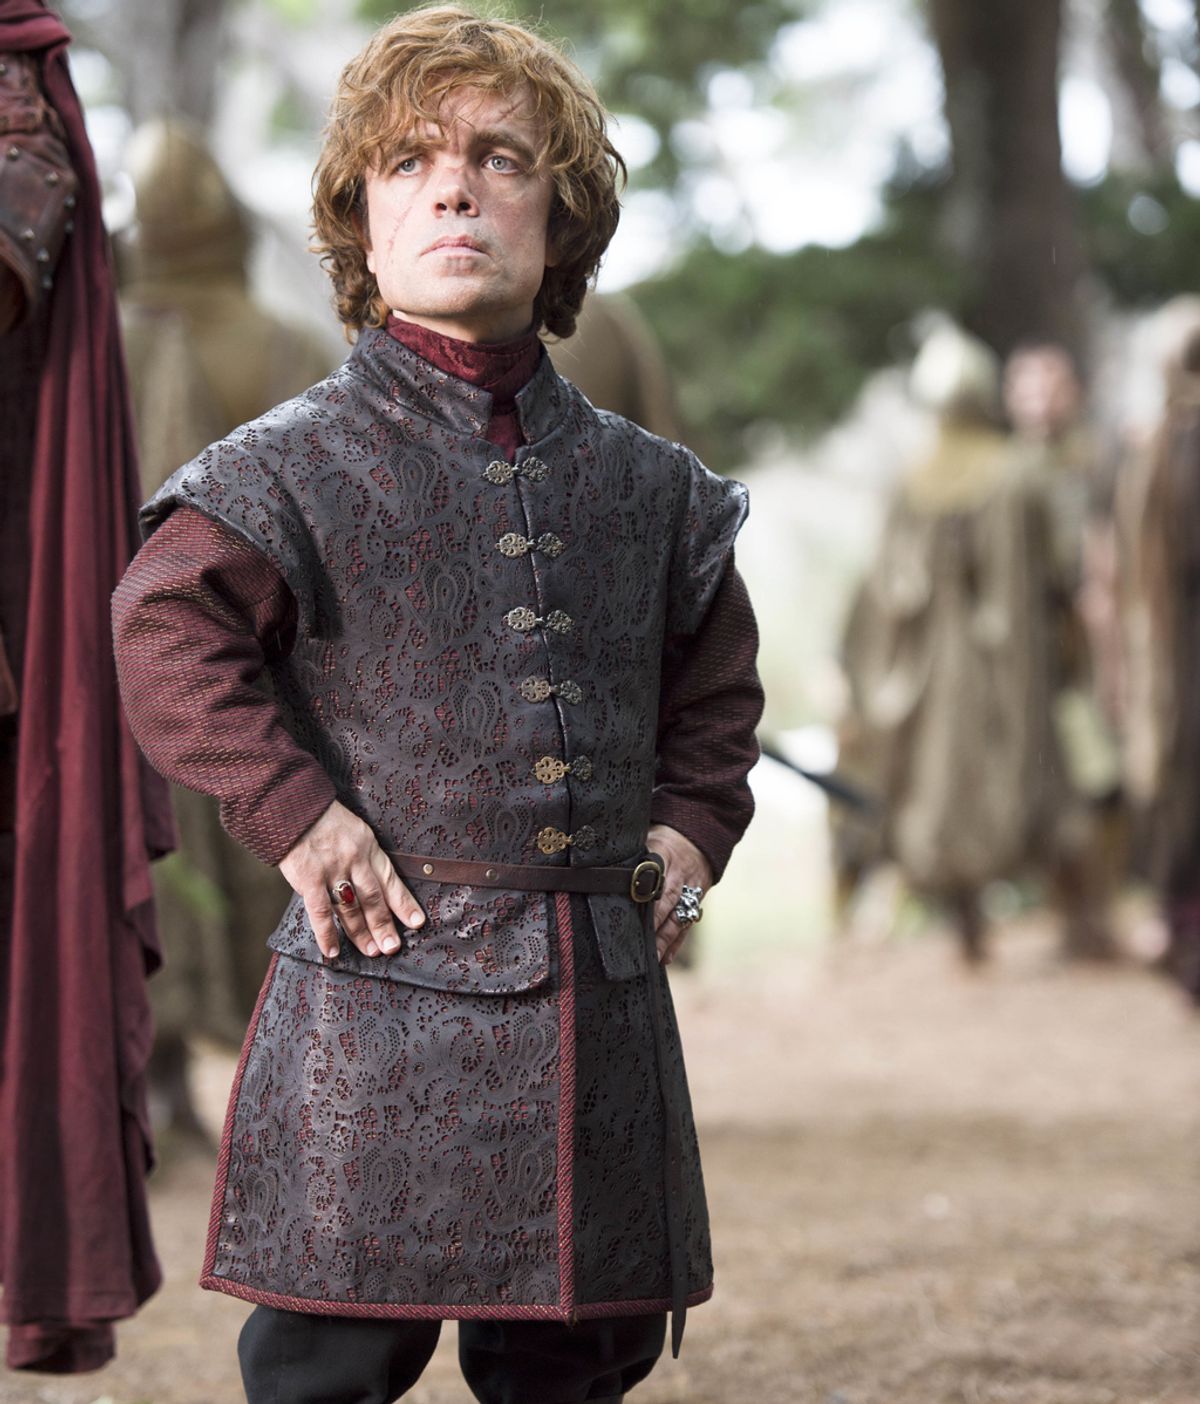 Tyrion Lannister, 'Juego de tronos'